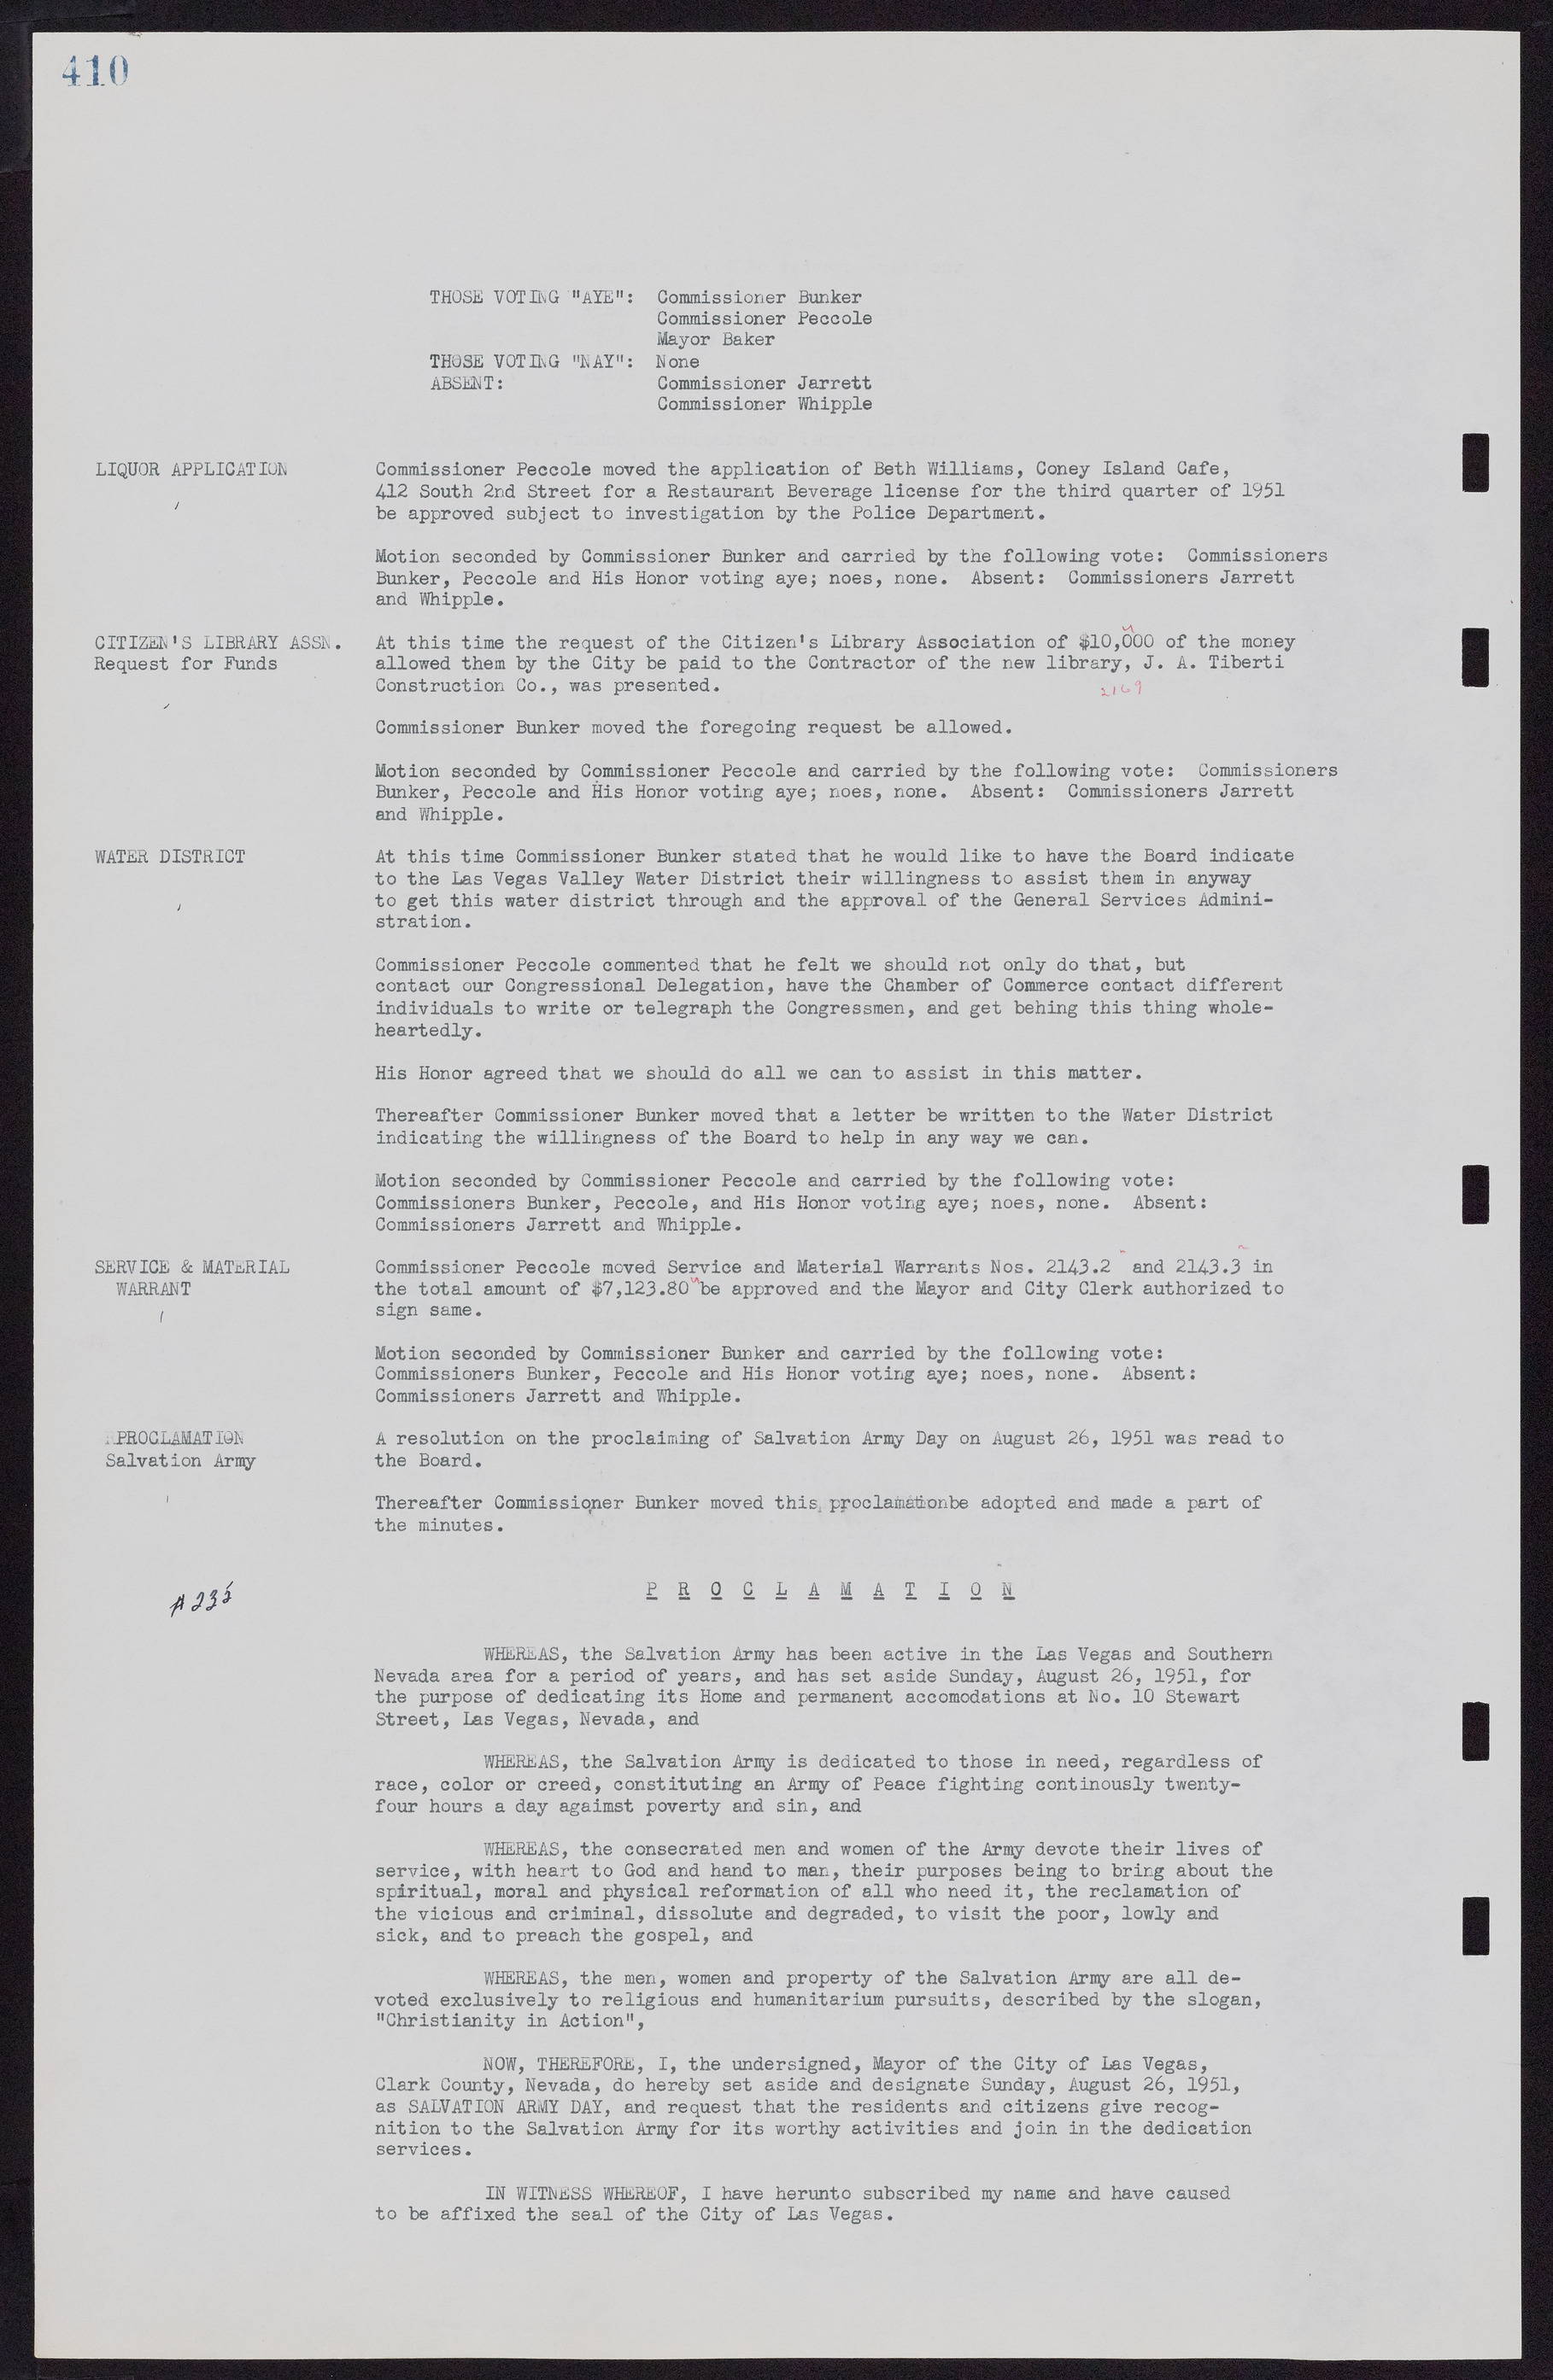 Las Vegas City Commission Minutes, November 7, 1949 to May 21, 1952, lvc000007-426